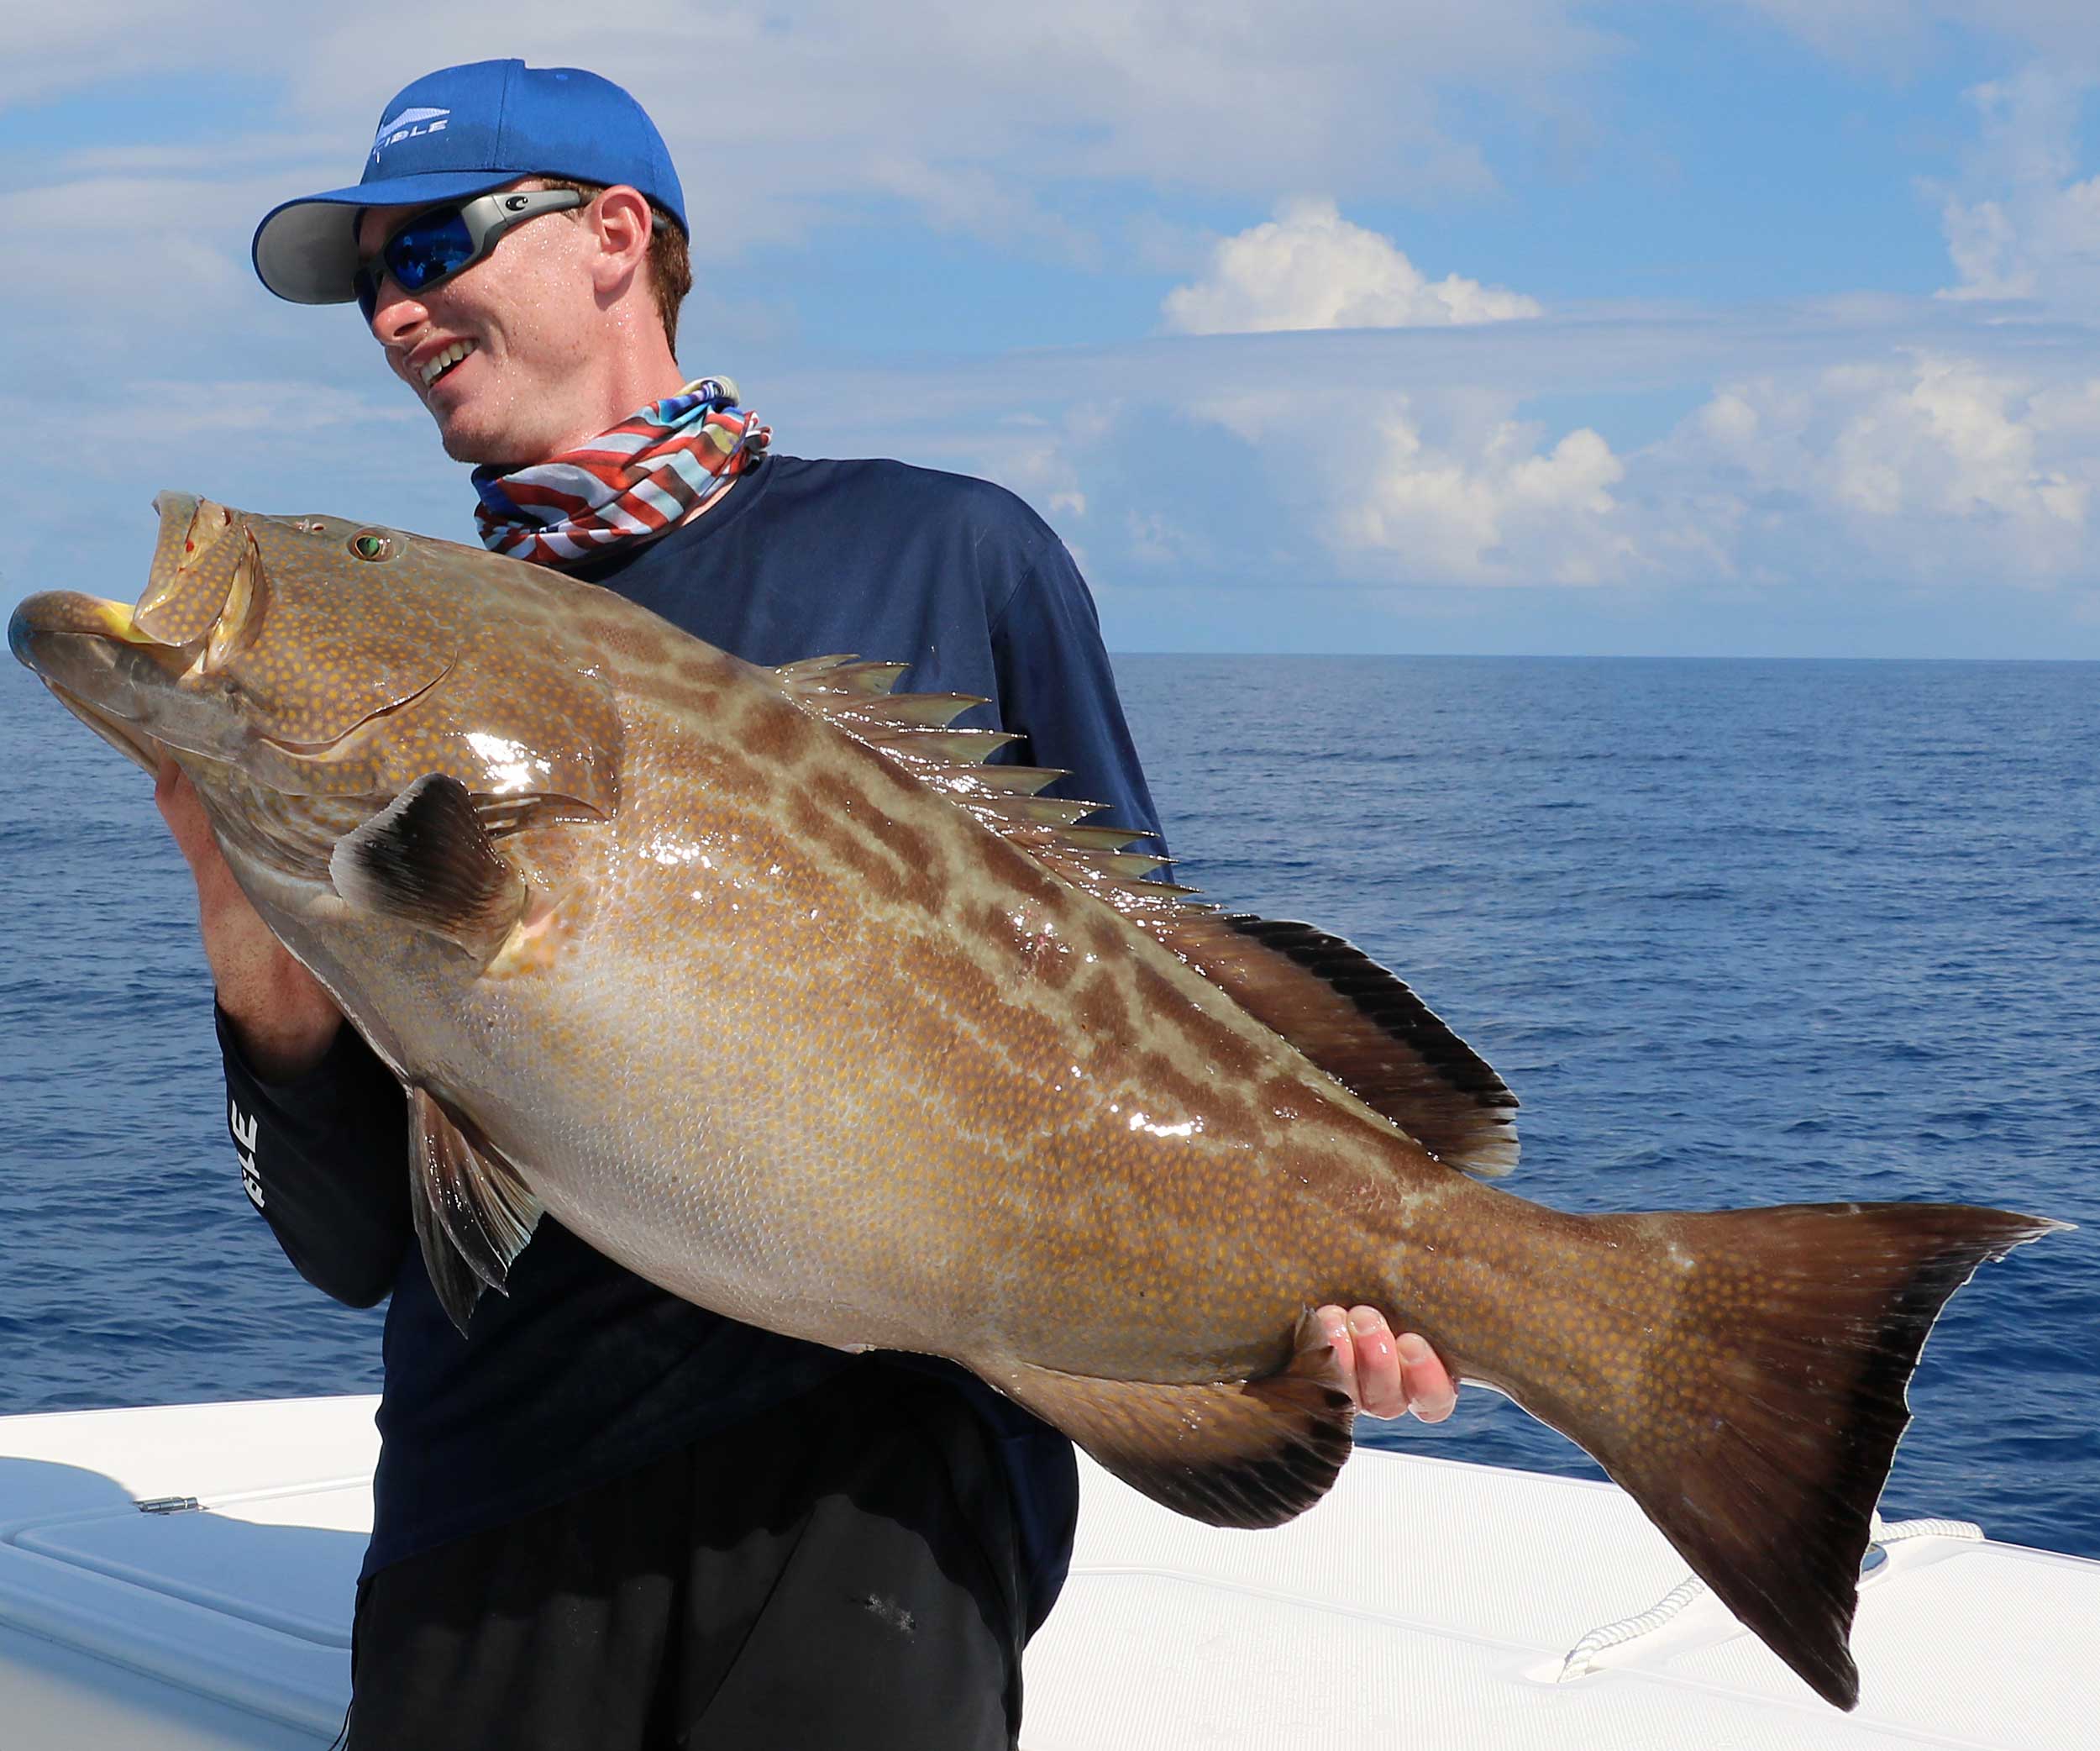 Fish South Florida's Prime Grouper Season